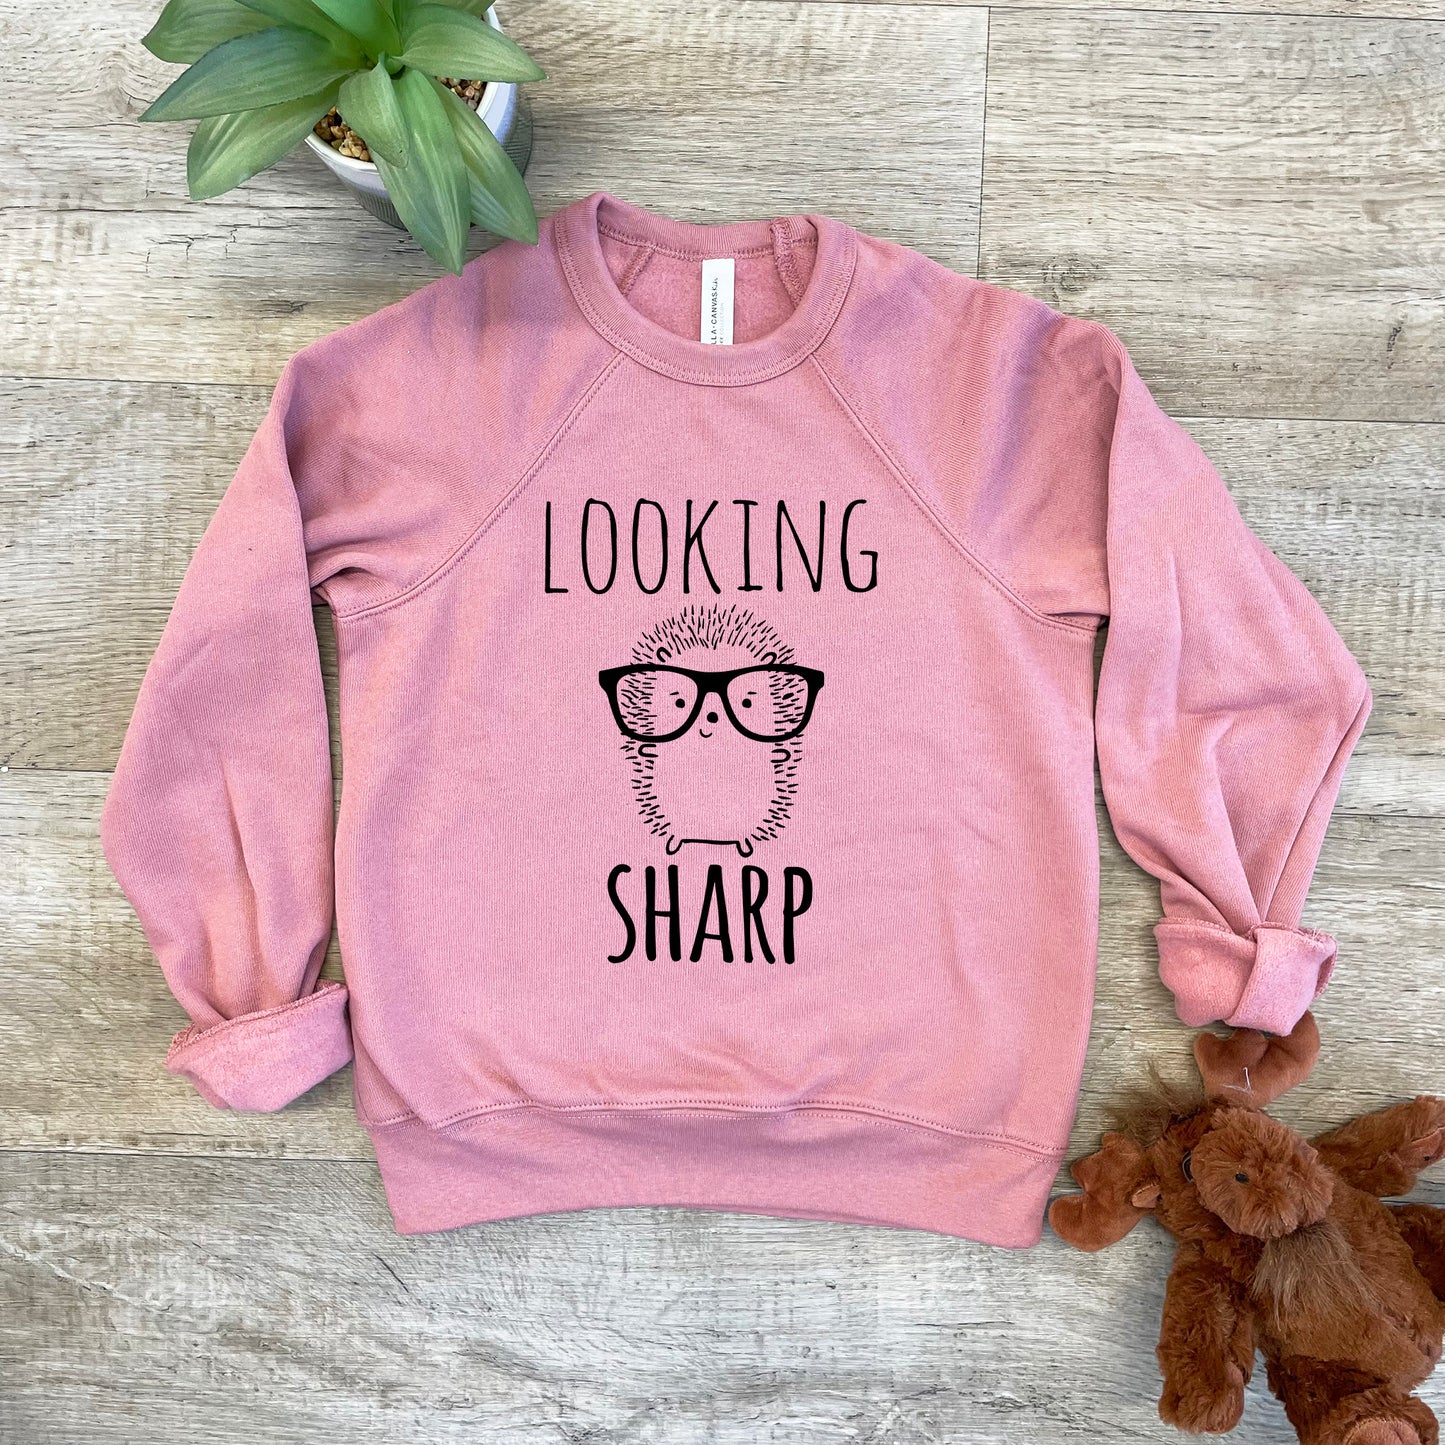 Looking Sharp (Hedgehog) - Kid's Sweatshirt - Heather Gray or Mauve